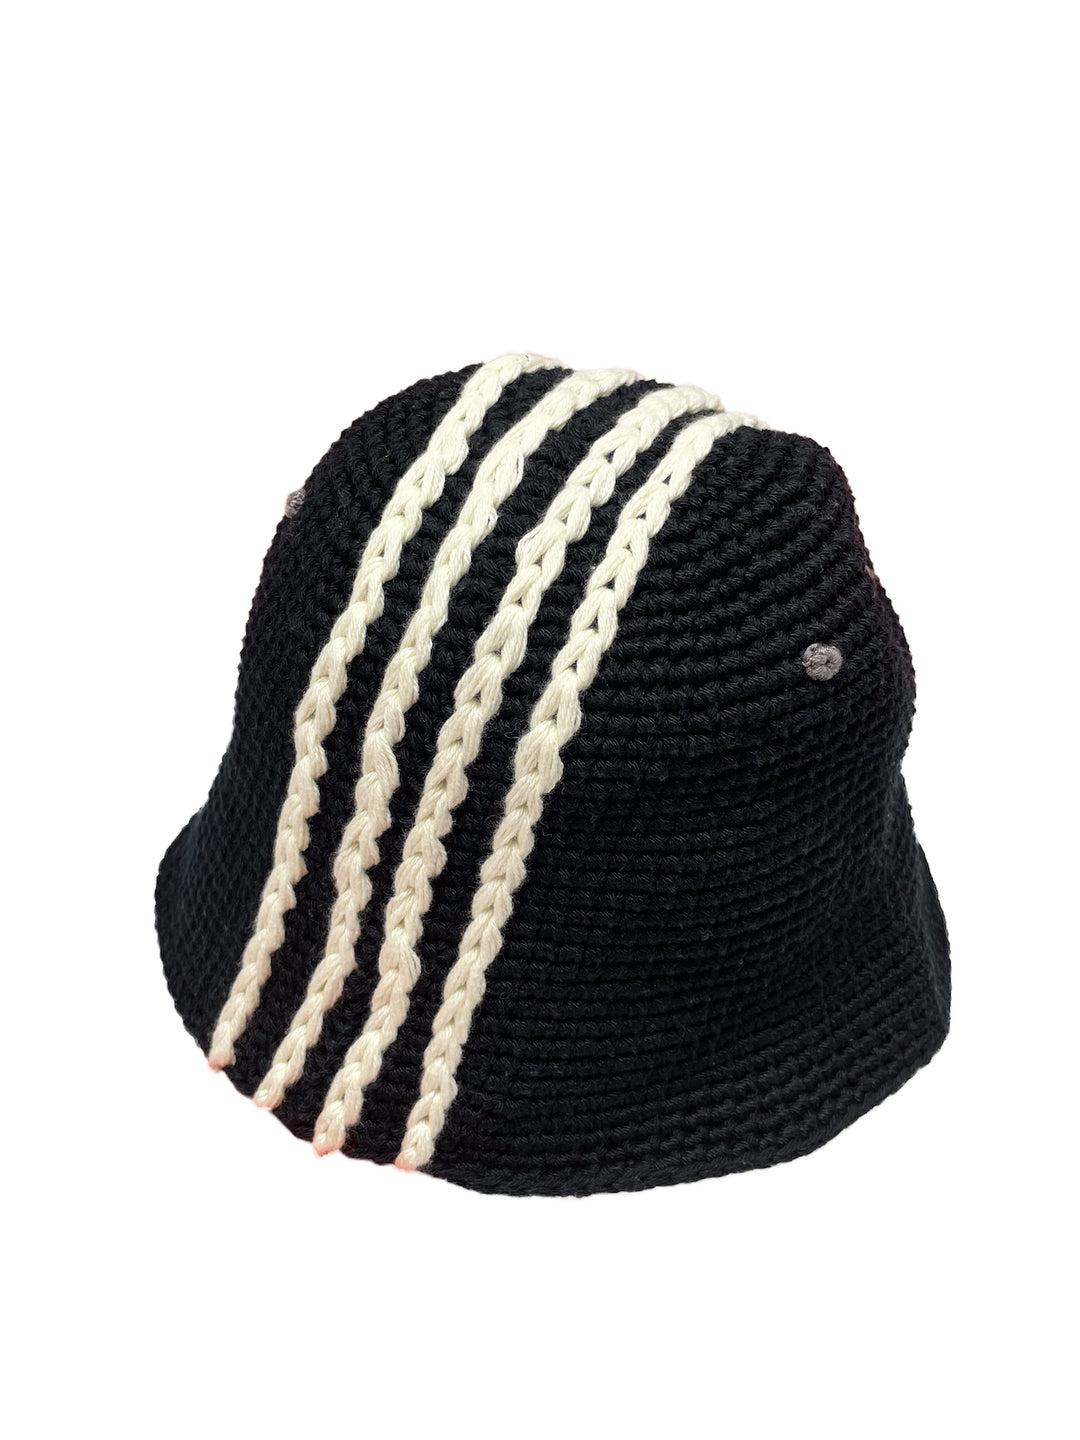 Hand Knitting 4 Lines Hat BLACK